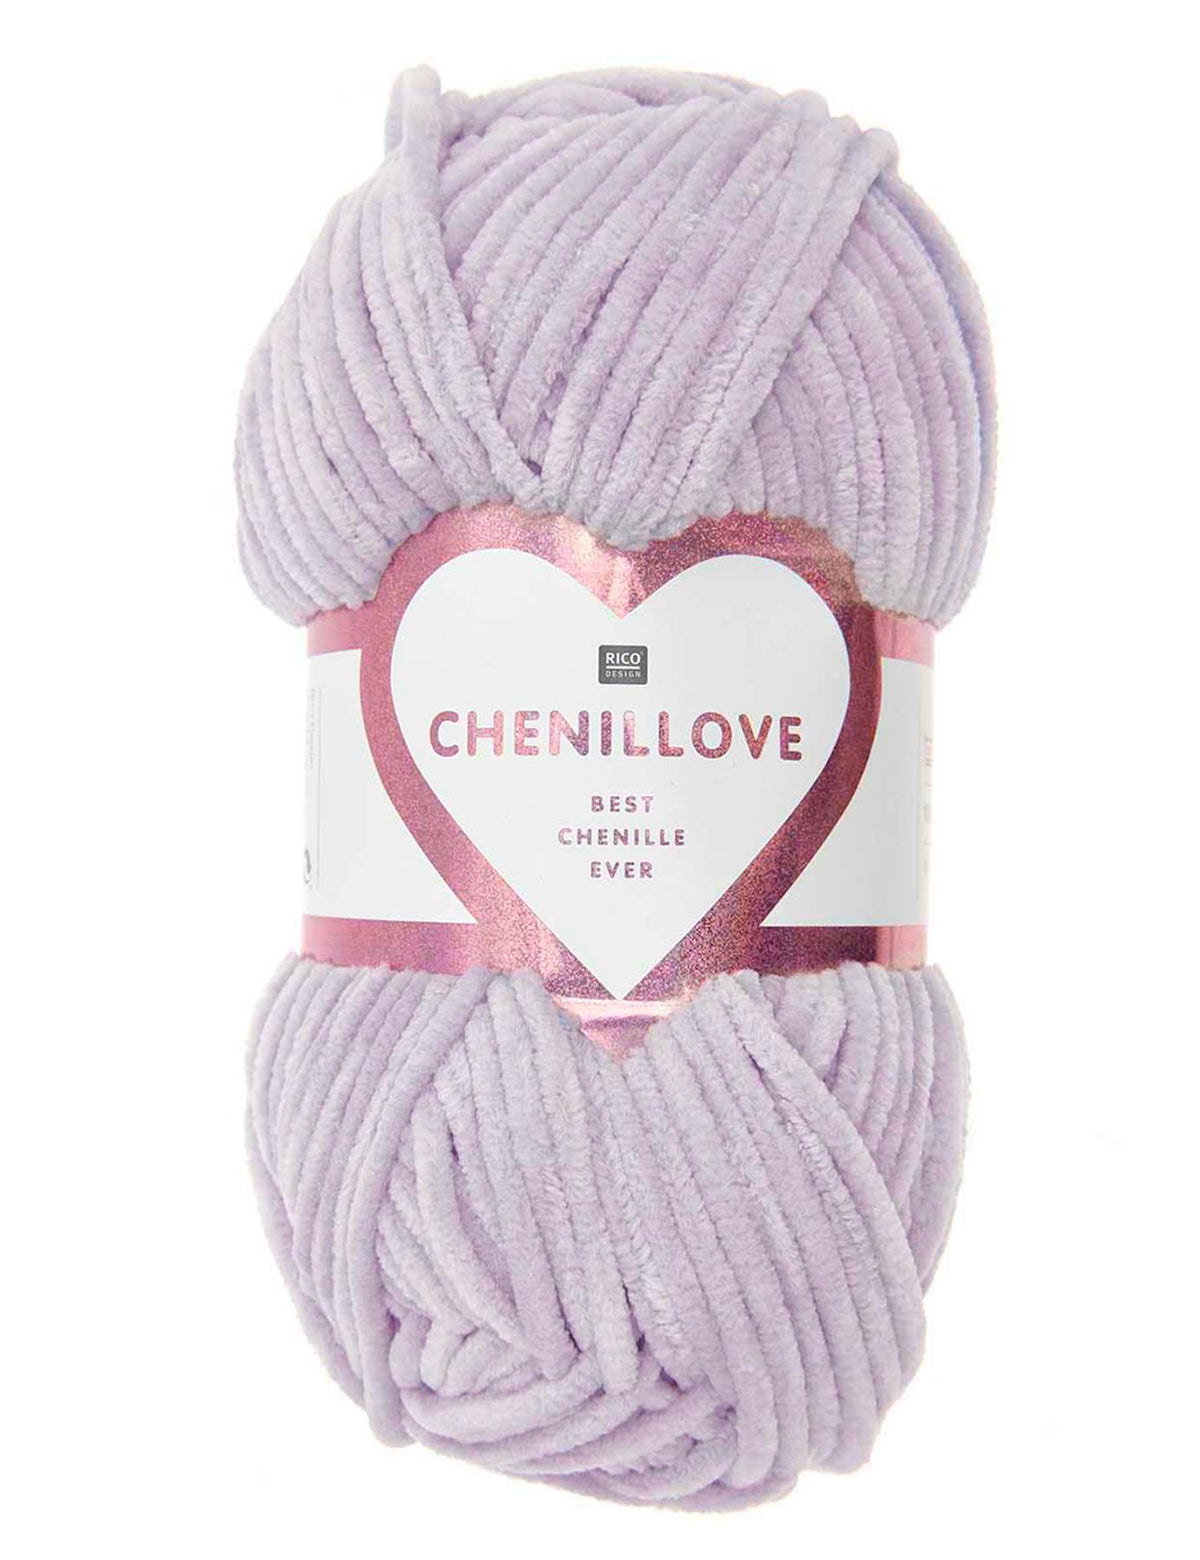 RICO Chenillove Lilac (007) chenille yarn - 100g